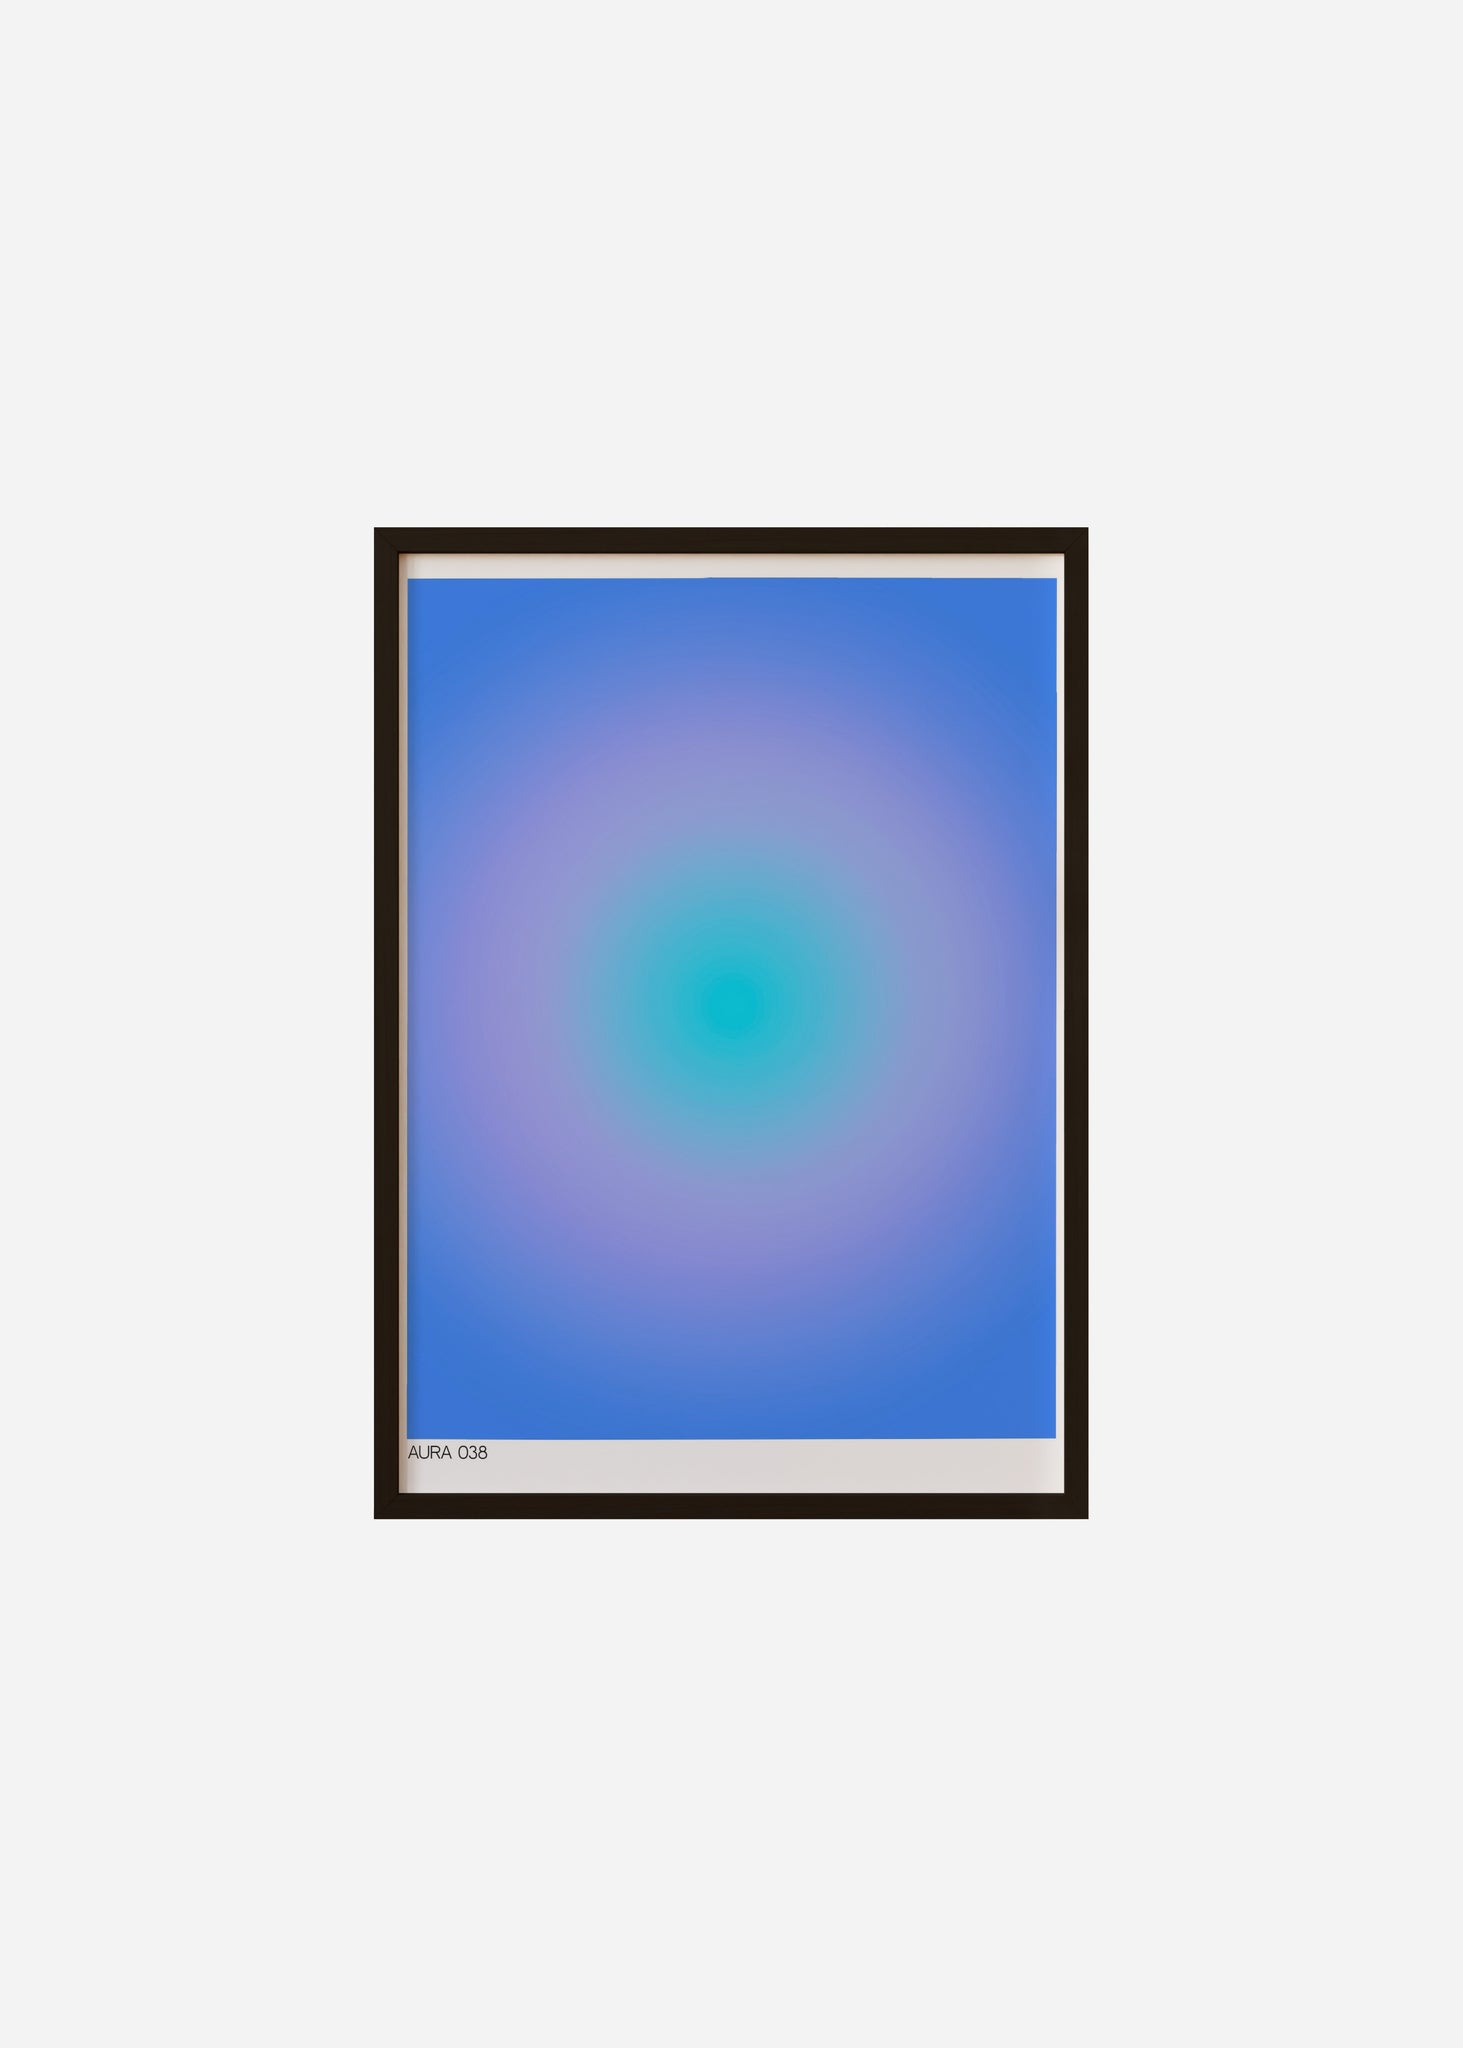 aura 038 Framed Print